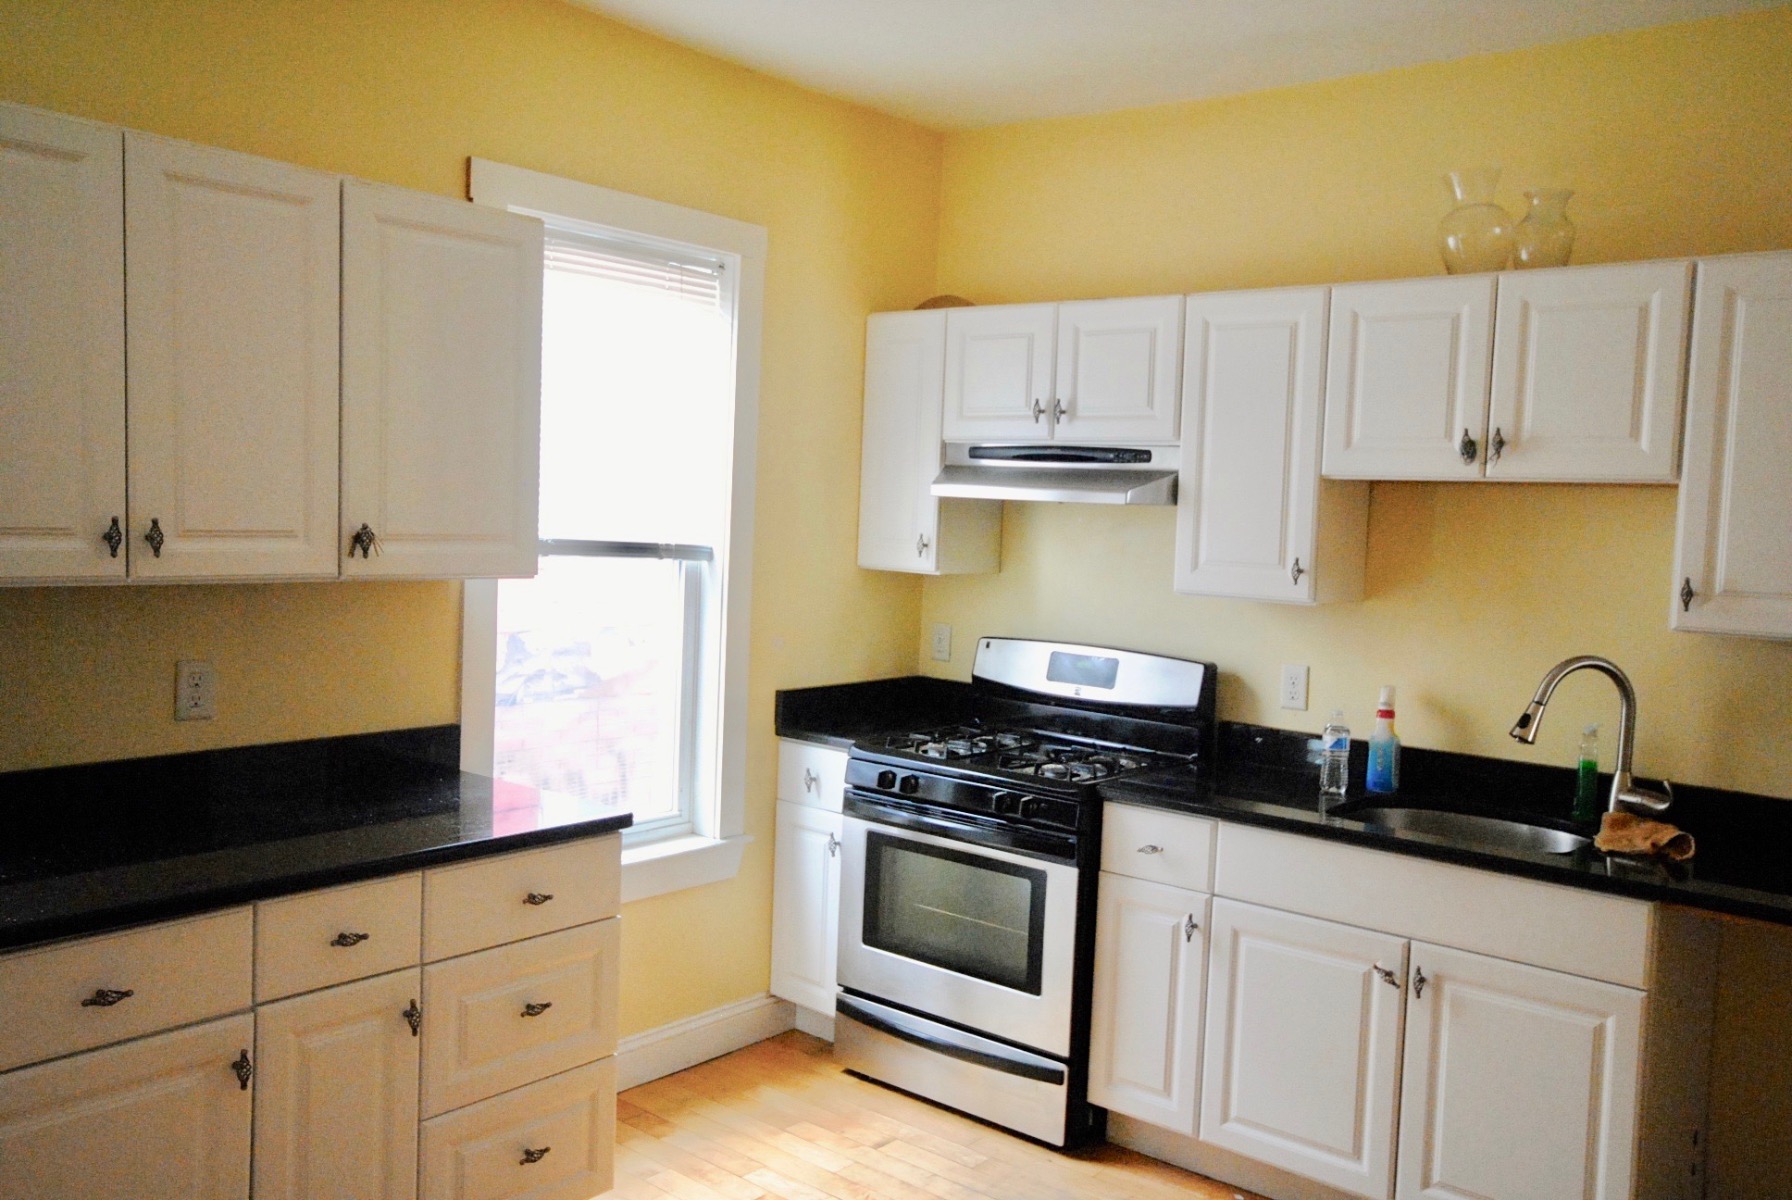 Photos of apartment on Sudan Steet,Boston MA 02125